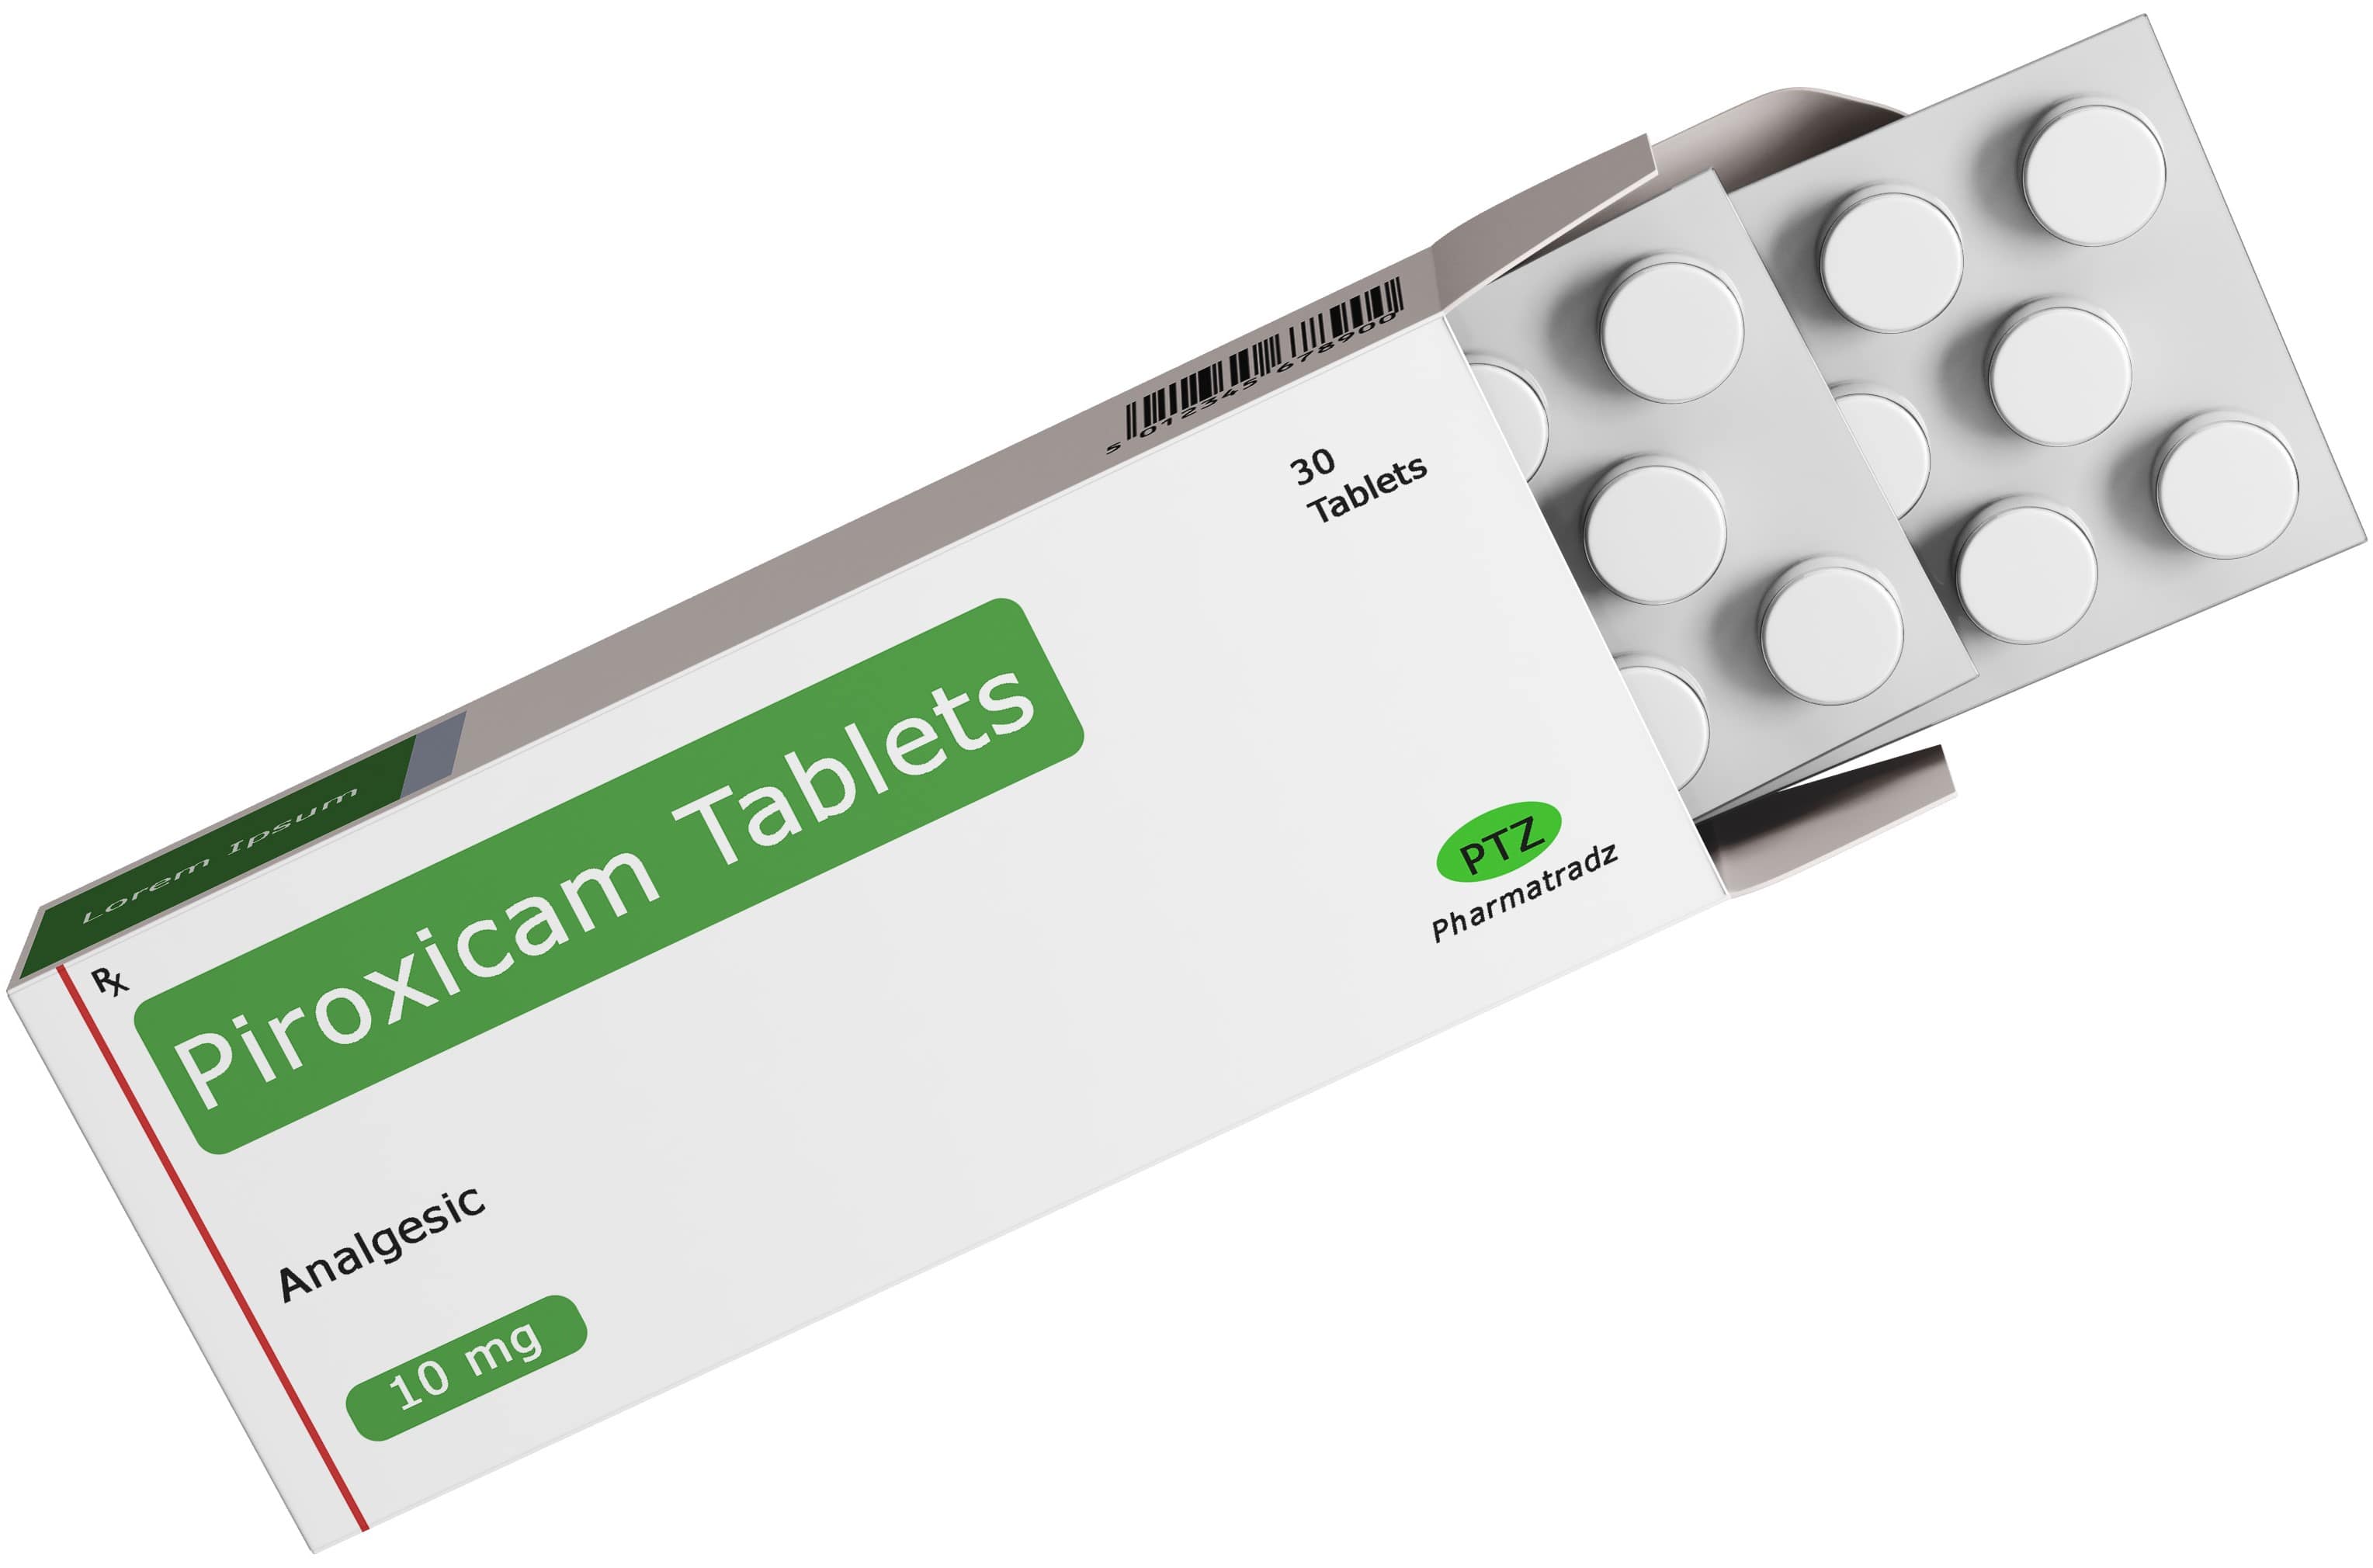 Piroxicam Tablets